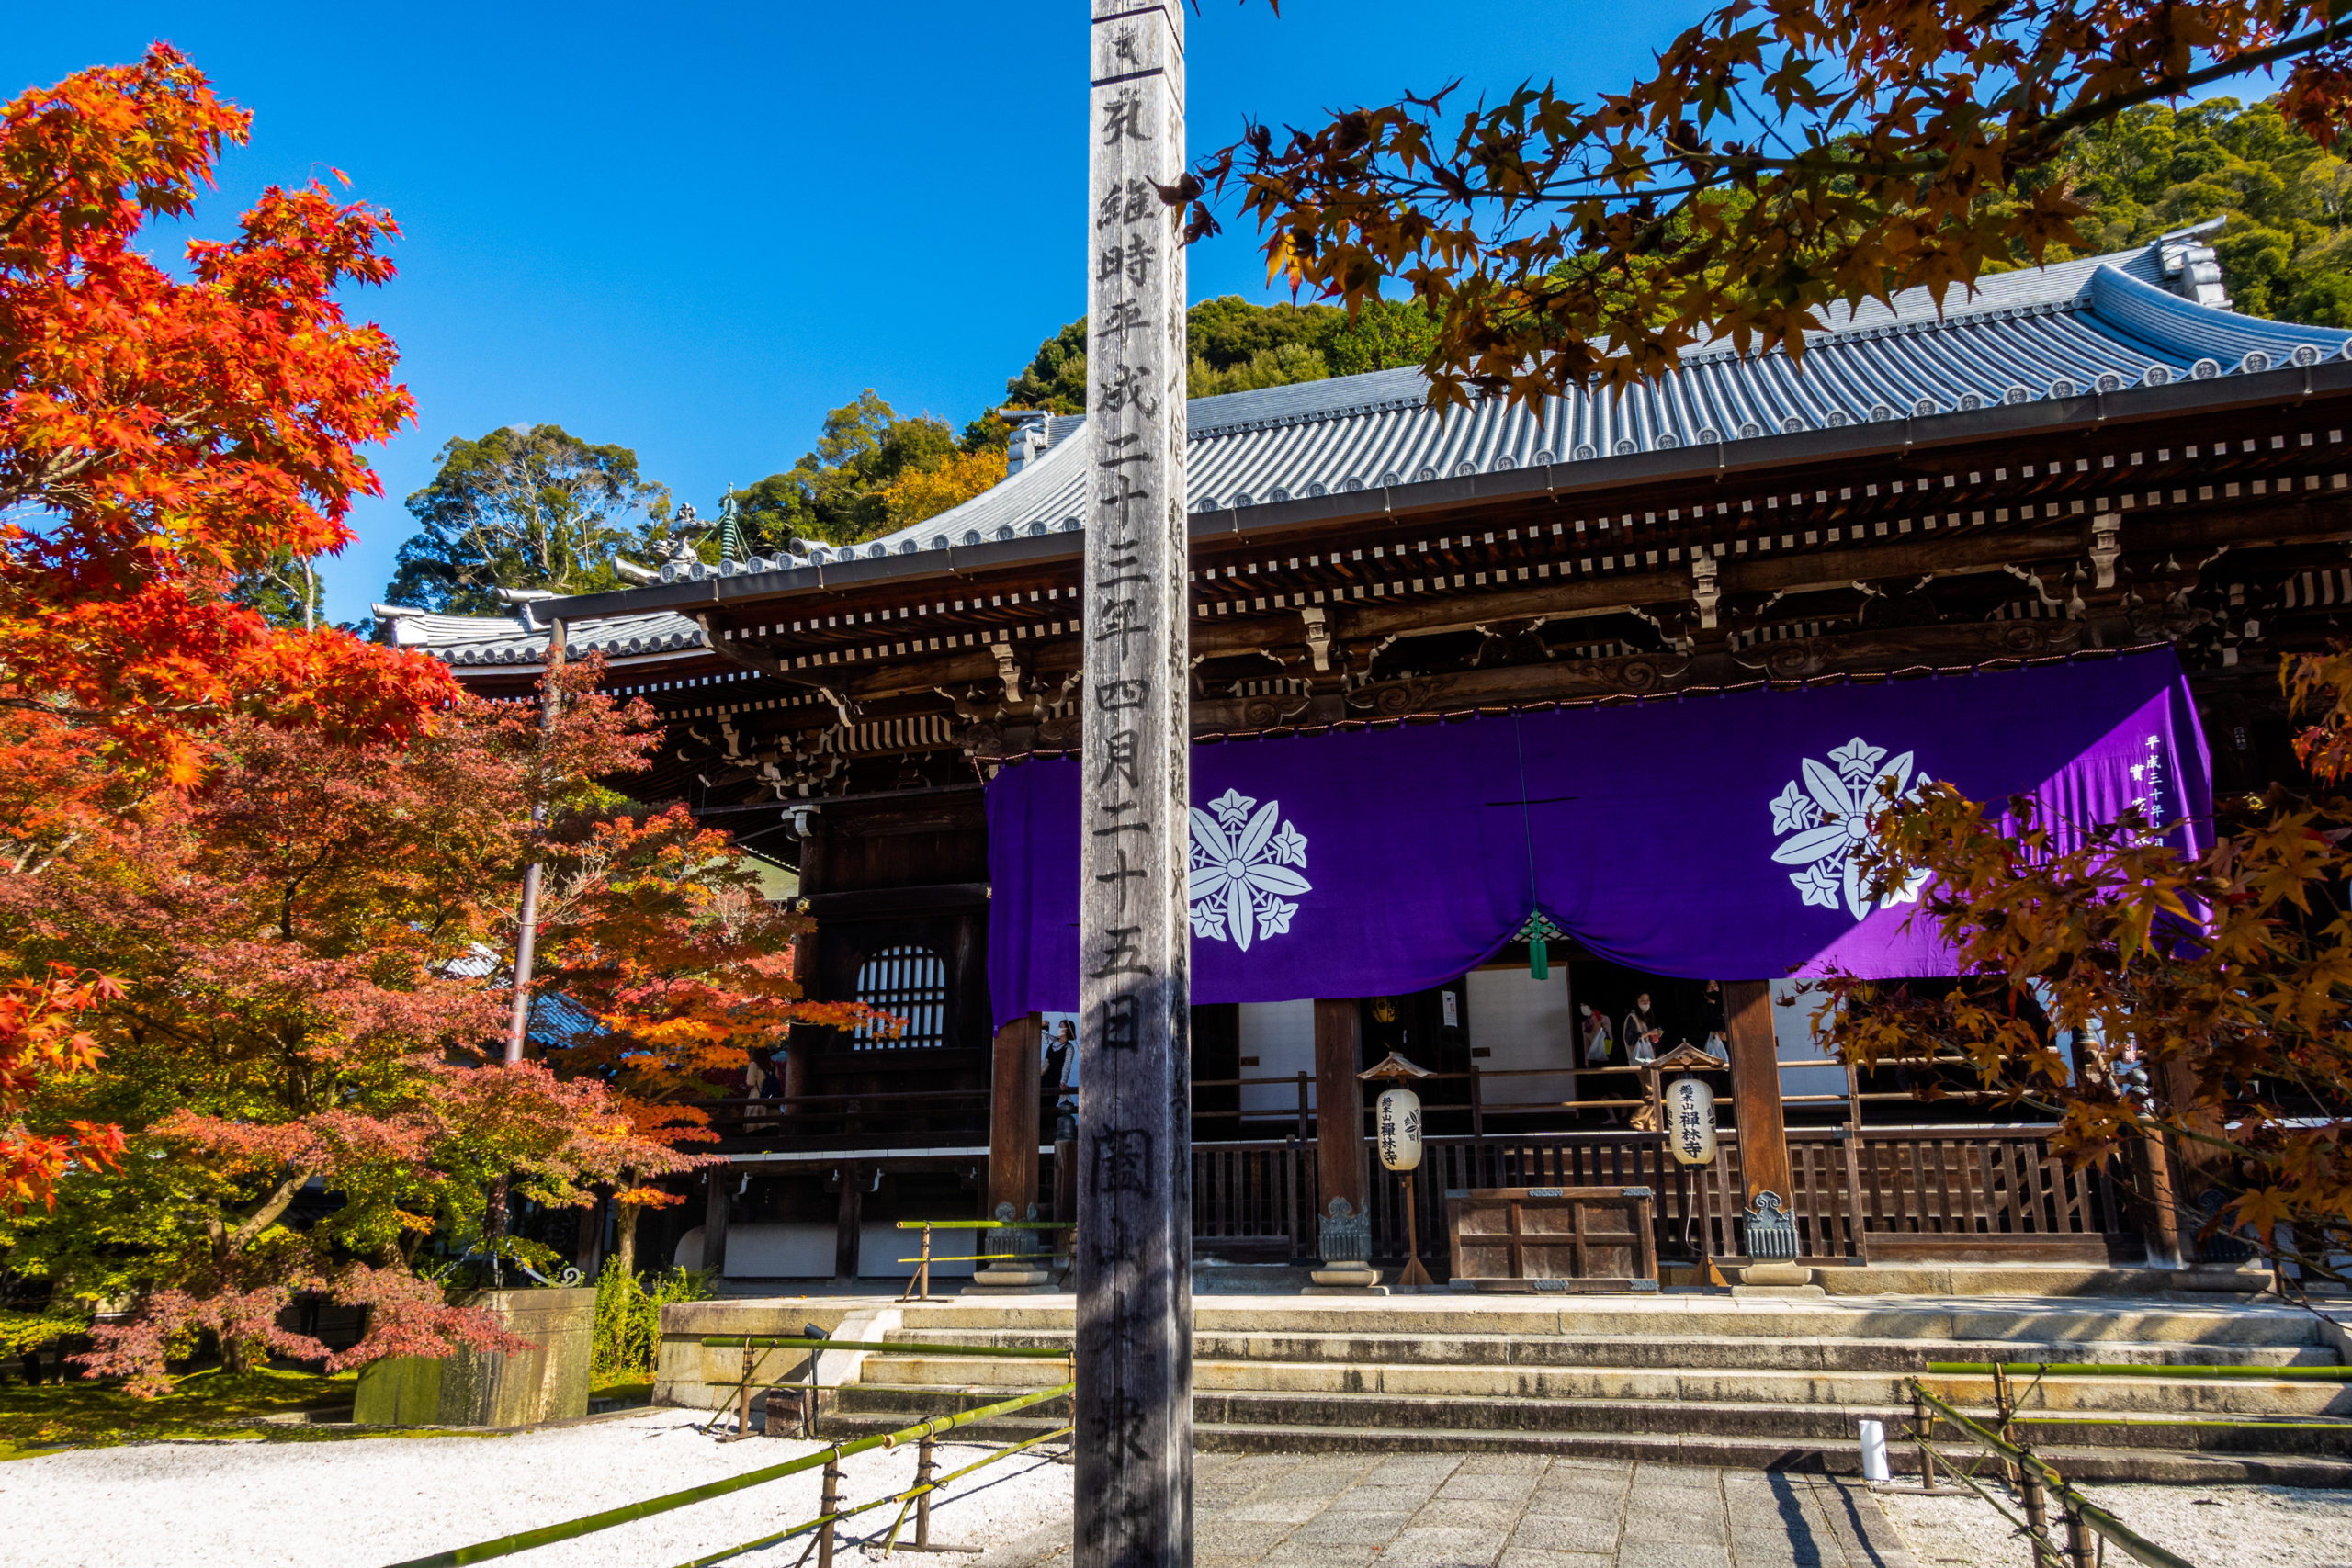 DSC00680-scaled 京都  永観堂-禅林寺(池に映る紅葉の風景が美しい秋におすすめのスポット!撮影した写真の紹介、アクセス情報・ライトアップ情報など)